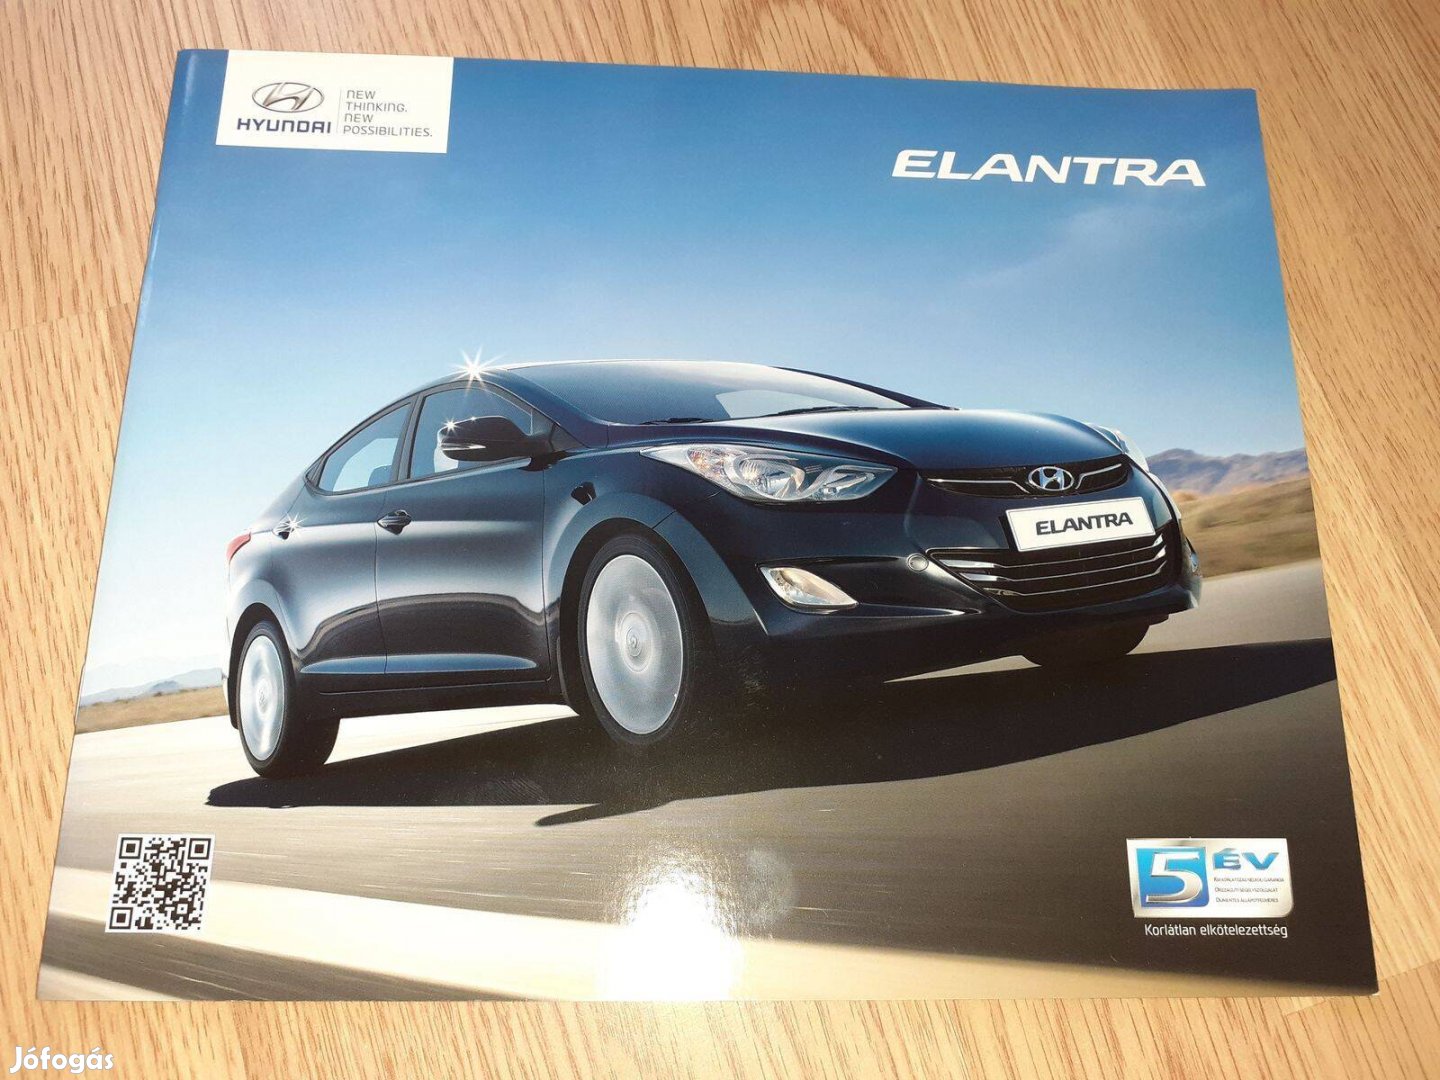 Hyundai Elantra prospektus - 2011, magyar nyelvű